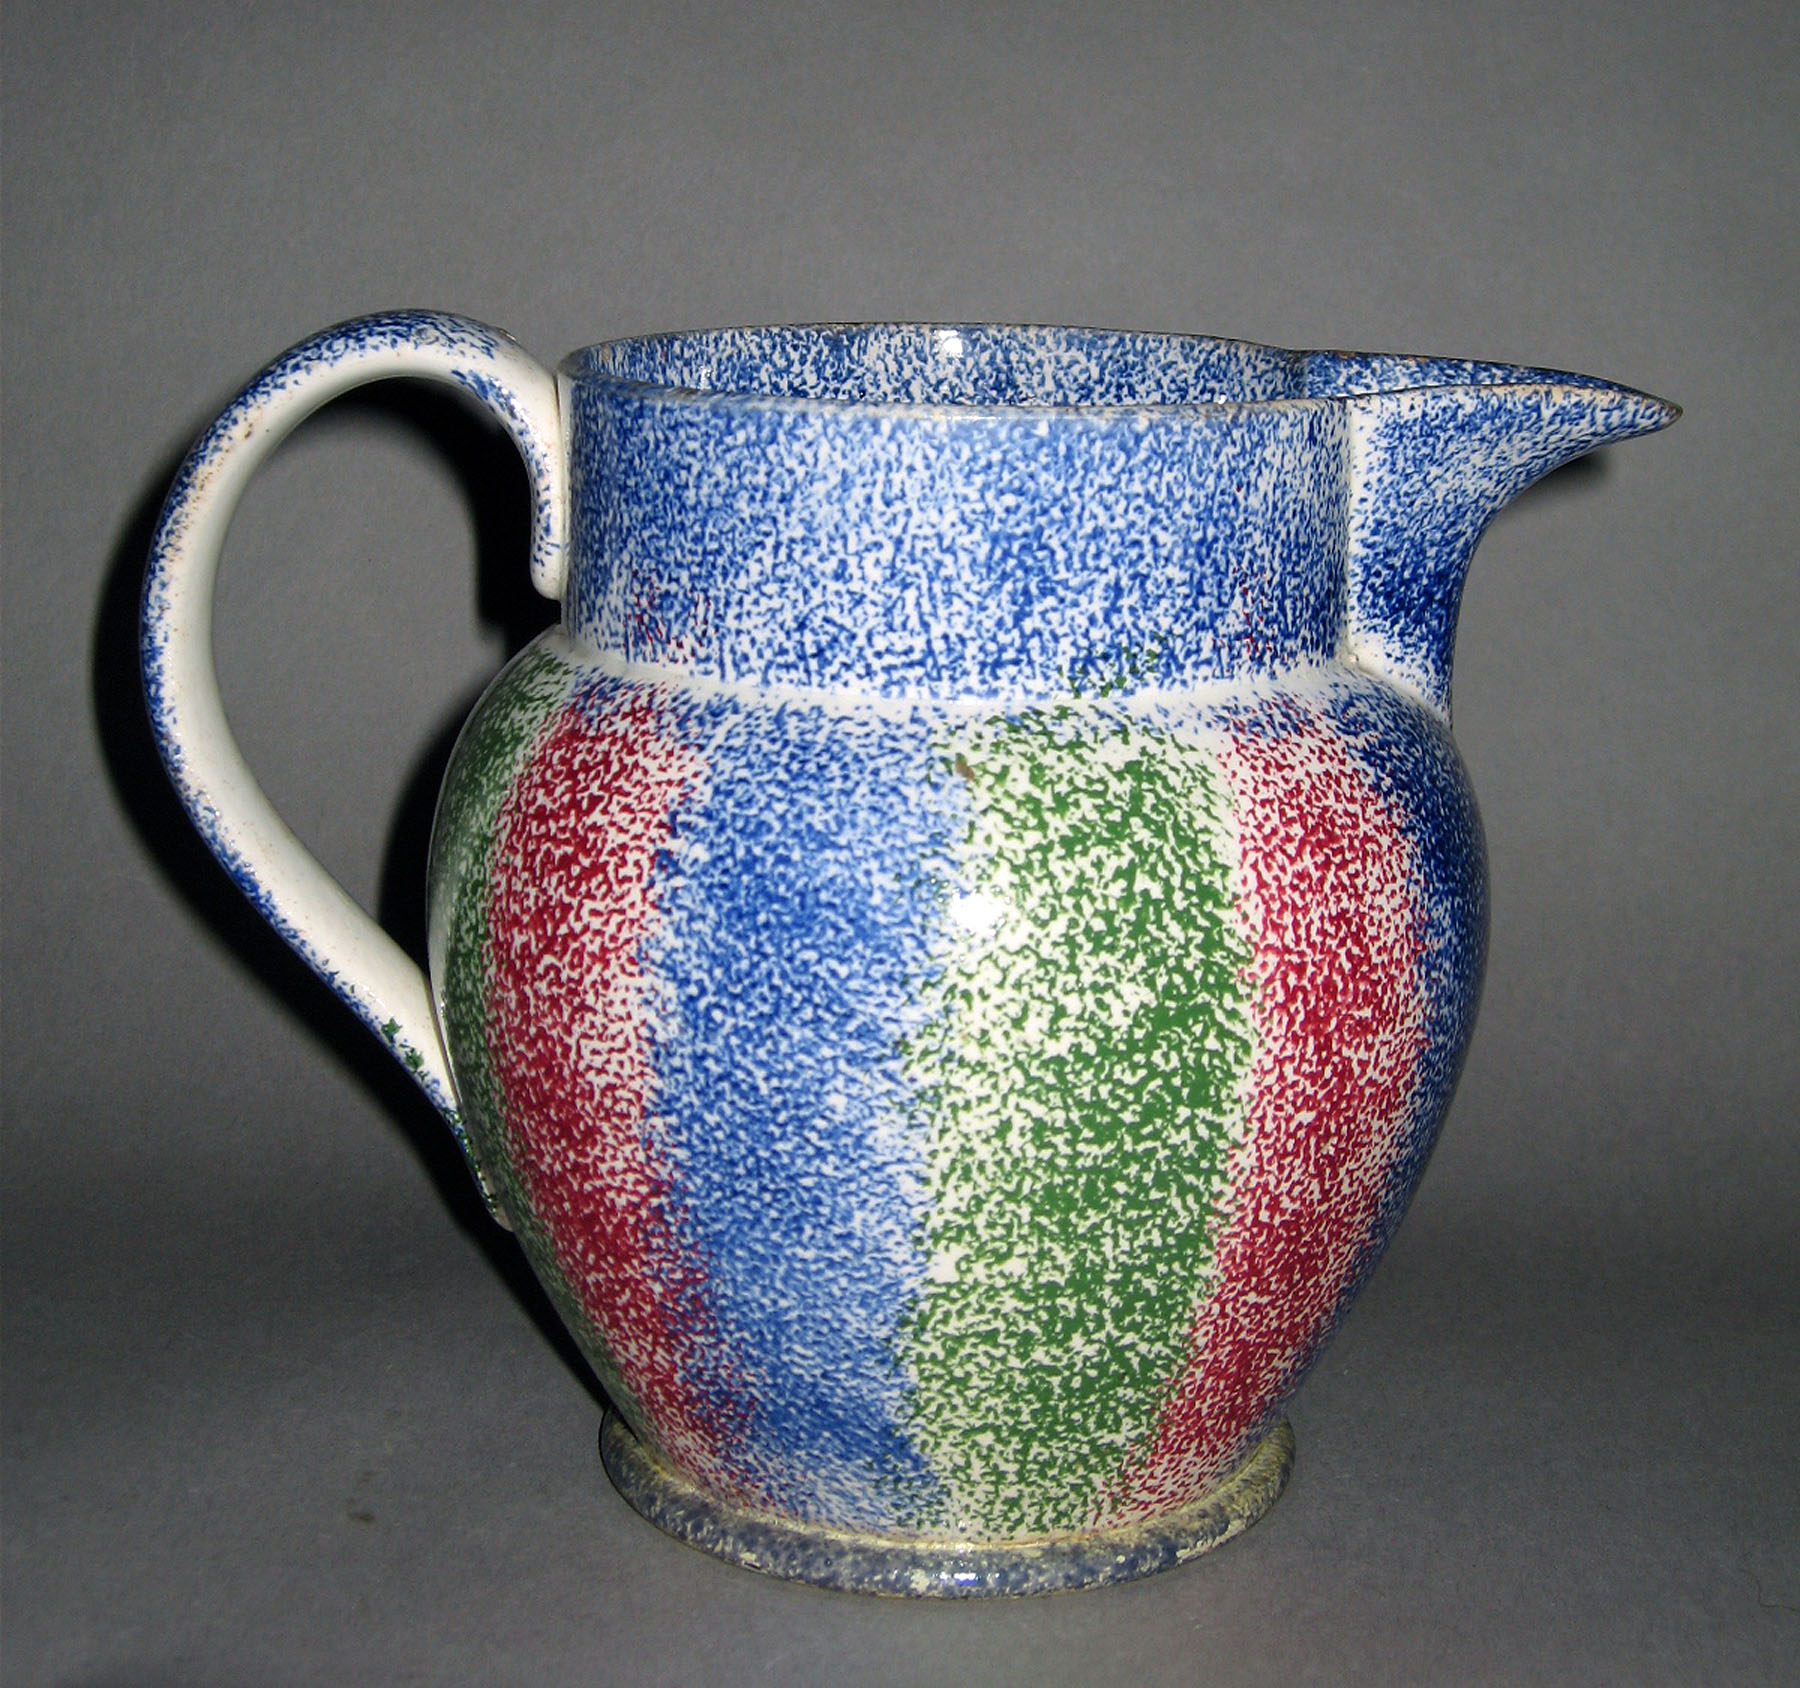 1965.0726 Spatterware jug